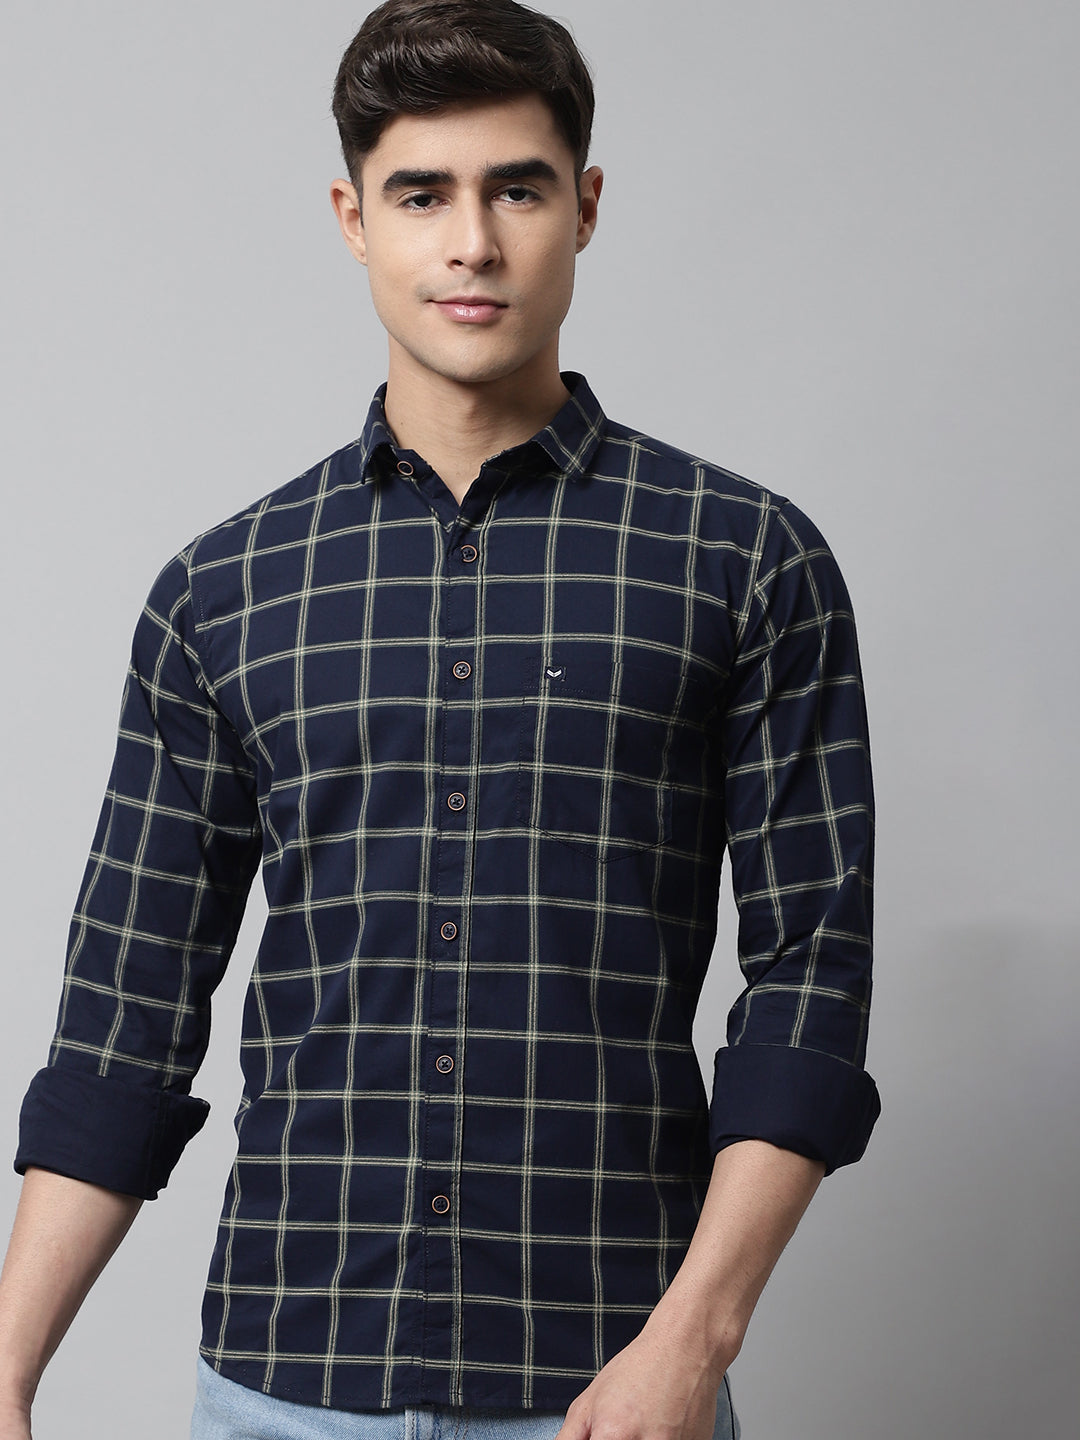 Classy Pure Cotton Checkered Shirt - Navy Blue